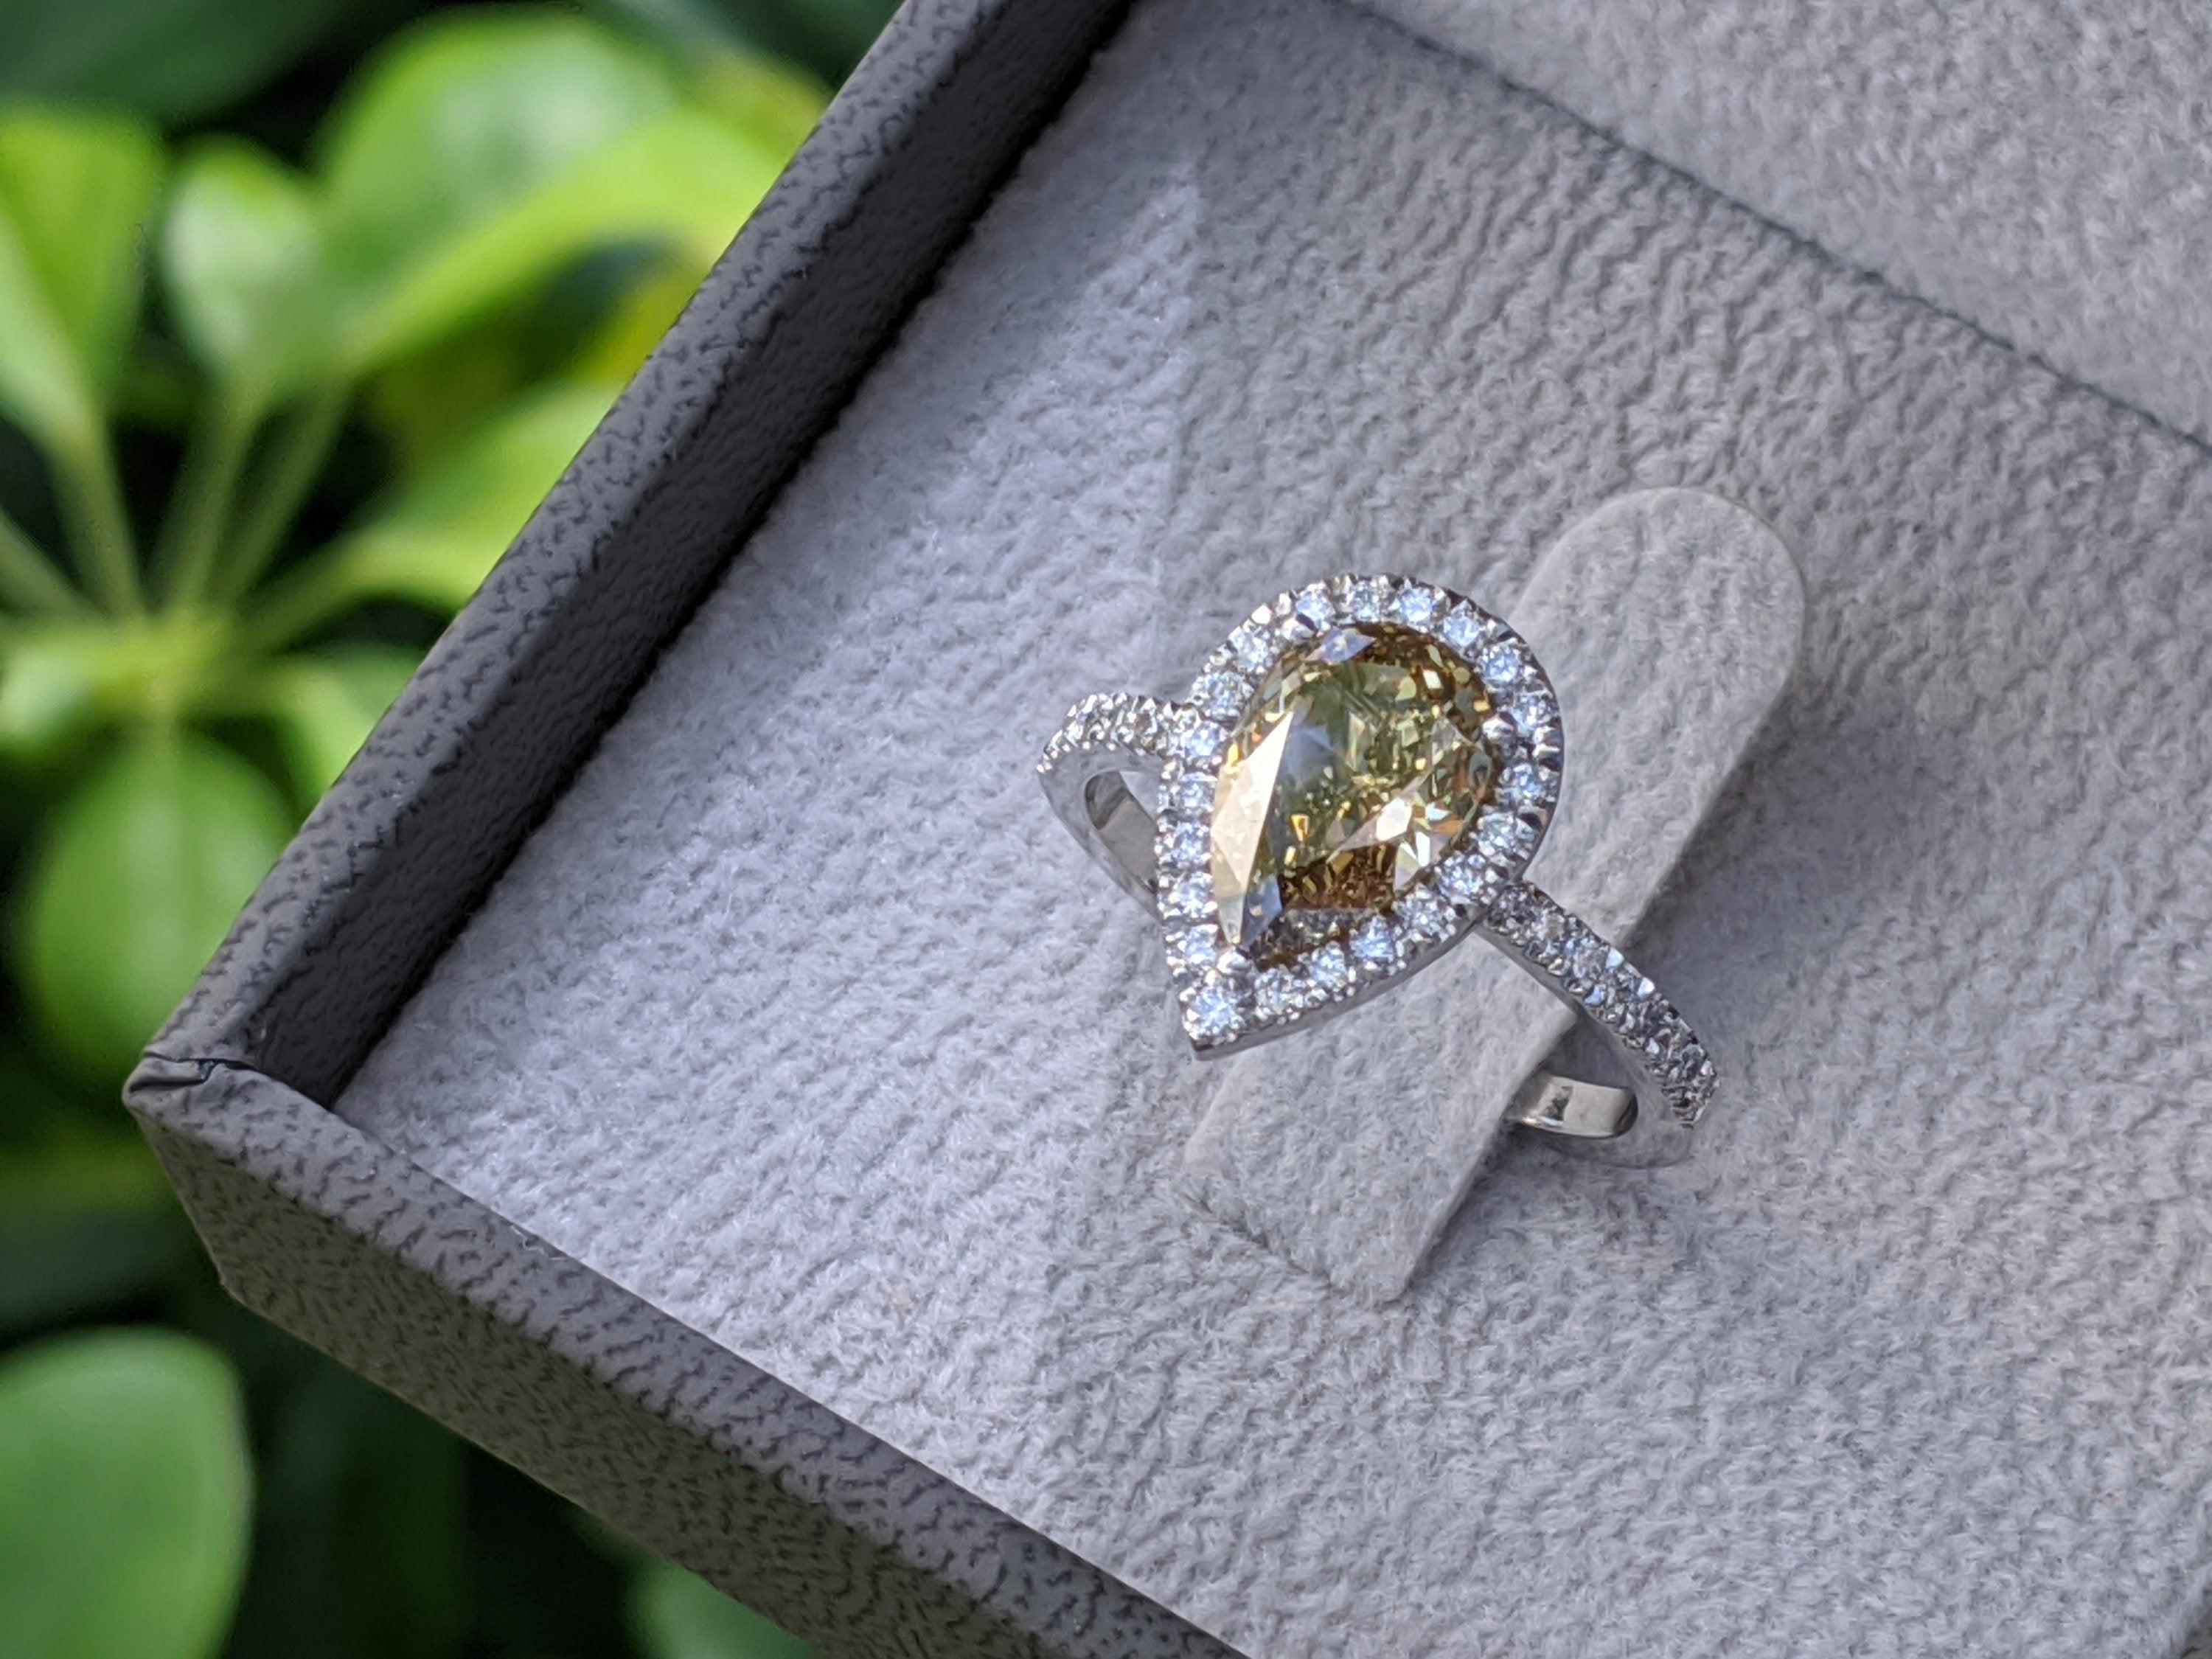 2 1/2 Carat Pear Engagement Ring, Chocolate Pear Diamond Ring, Champagne Diamond Halo Ring, Brownish Diamond Tear Drop, Anniversary Gift
 
 Main Stone Name: Natural Diamond
 Main Stone Weight: 2.00ct
 Main Stone Clarity: SI1
 Main Stone Color: